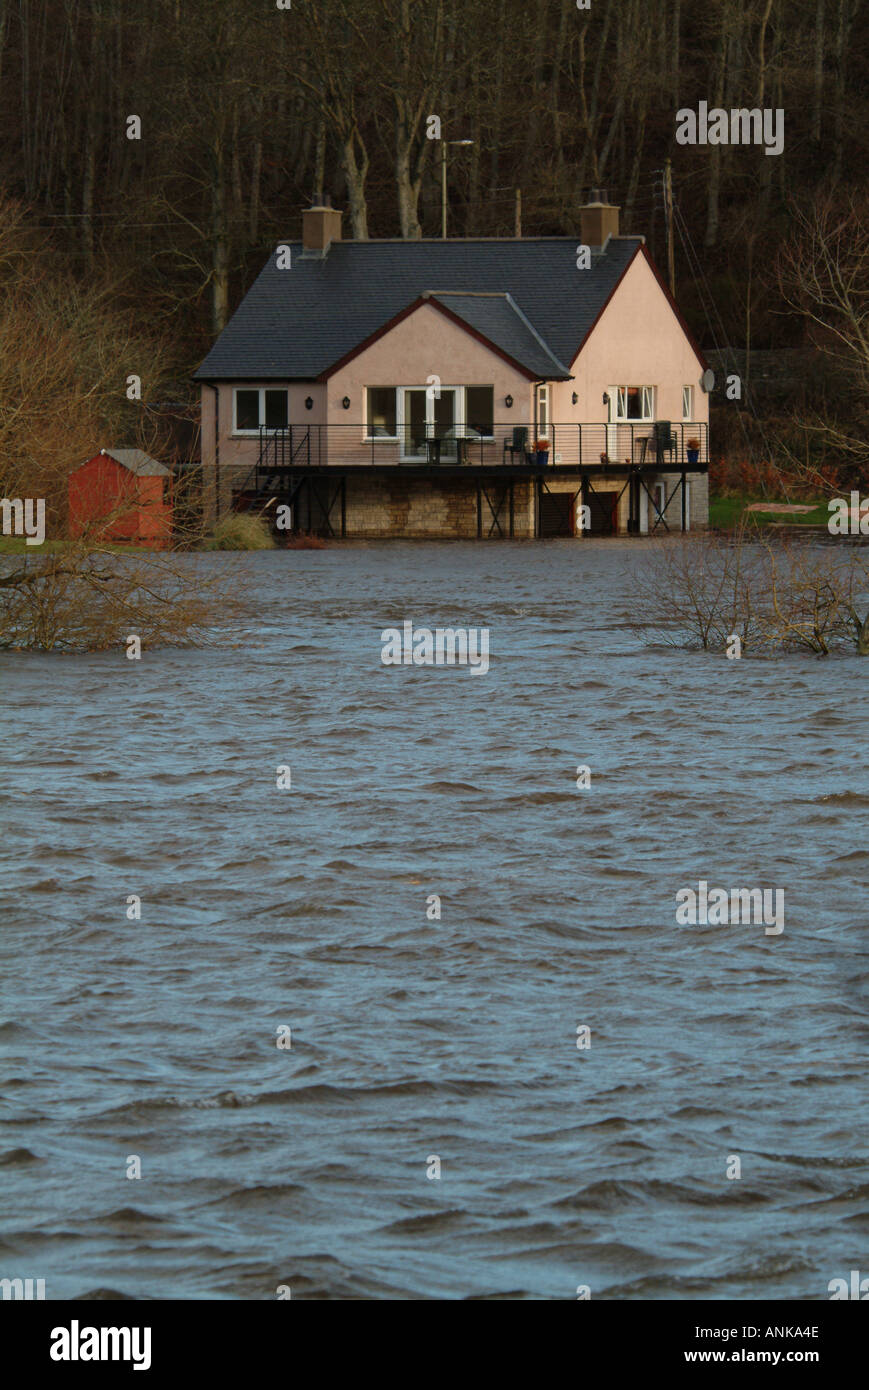 UK Scotland Perthshire Tay Valley near Aberfeldy River Tay flooding and house Stock Photo